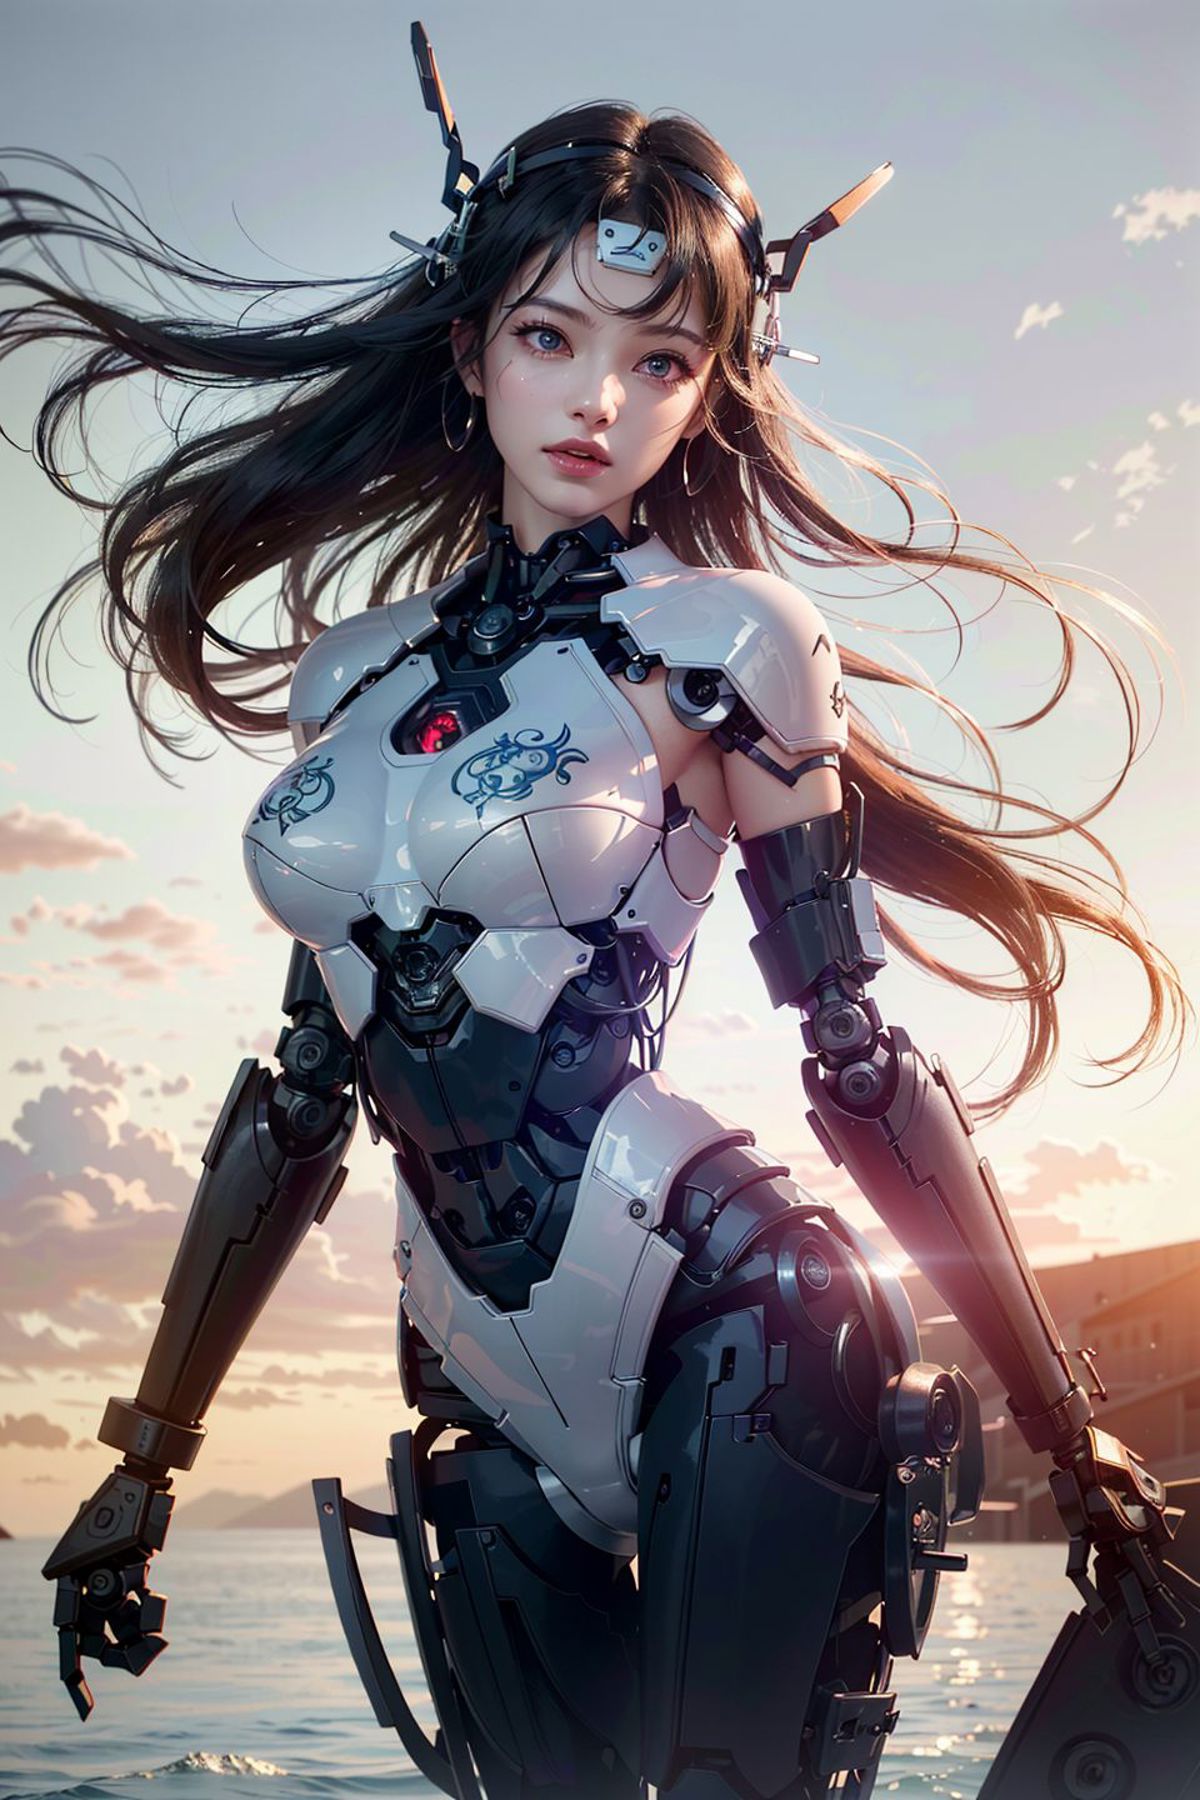 [LuisaP] 🤖 Humanoid Robots [1MB] image by ylnnn